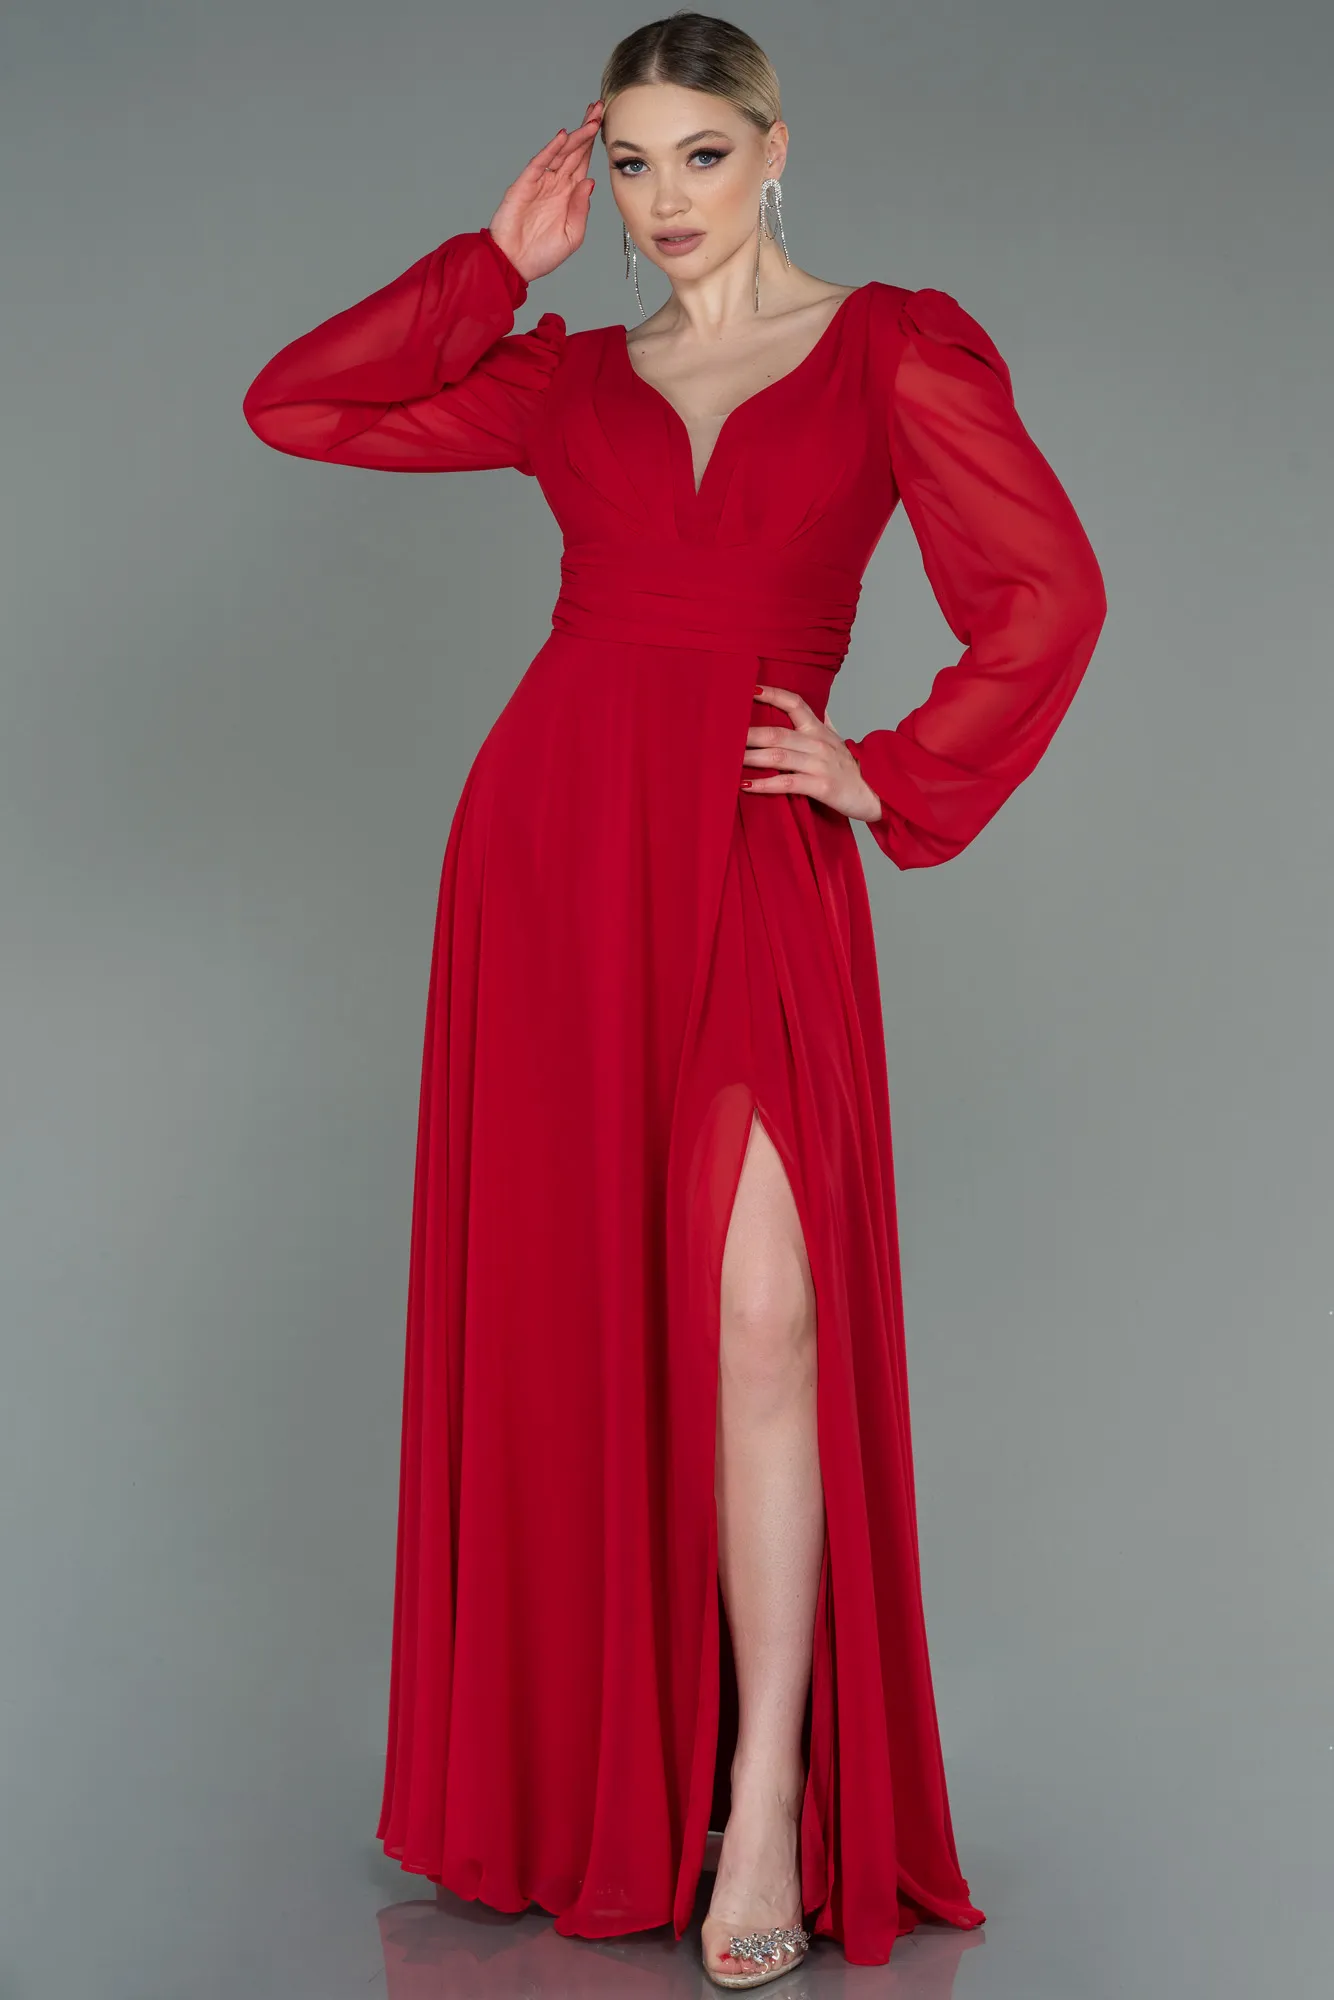 Red-Long Chiffon Evening Dress ABU3085